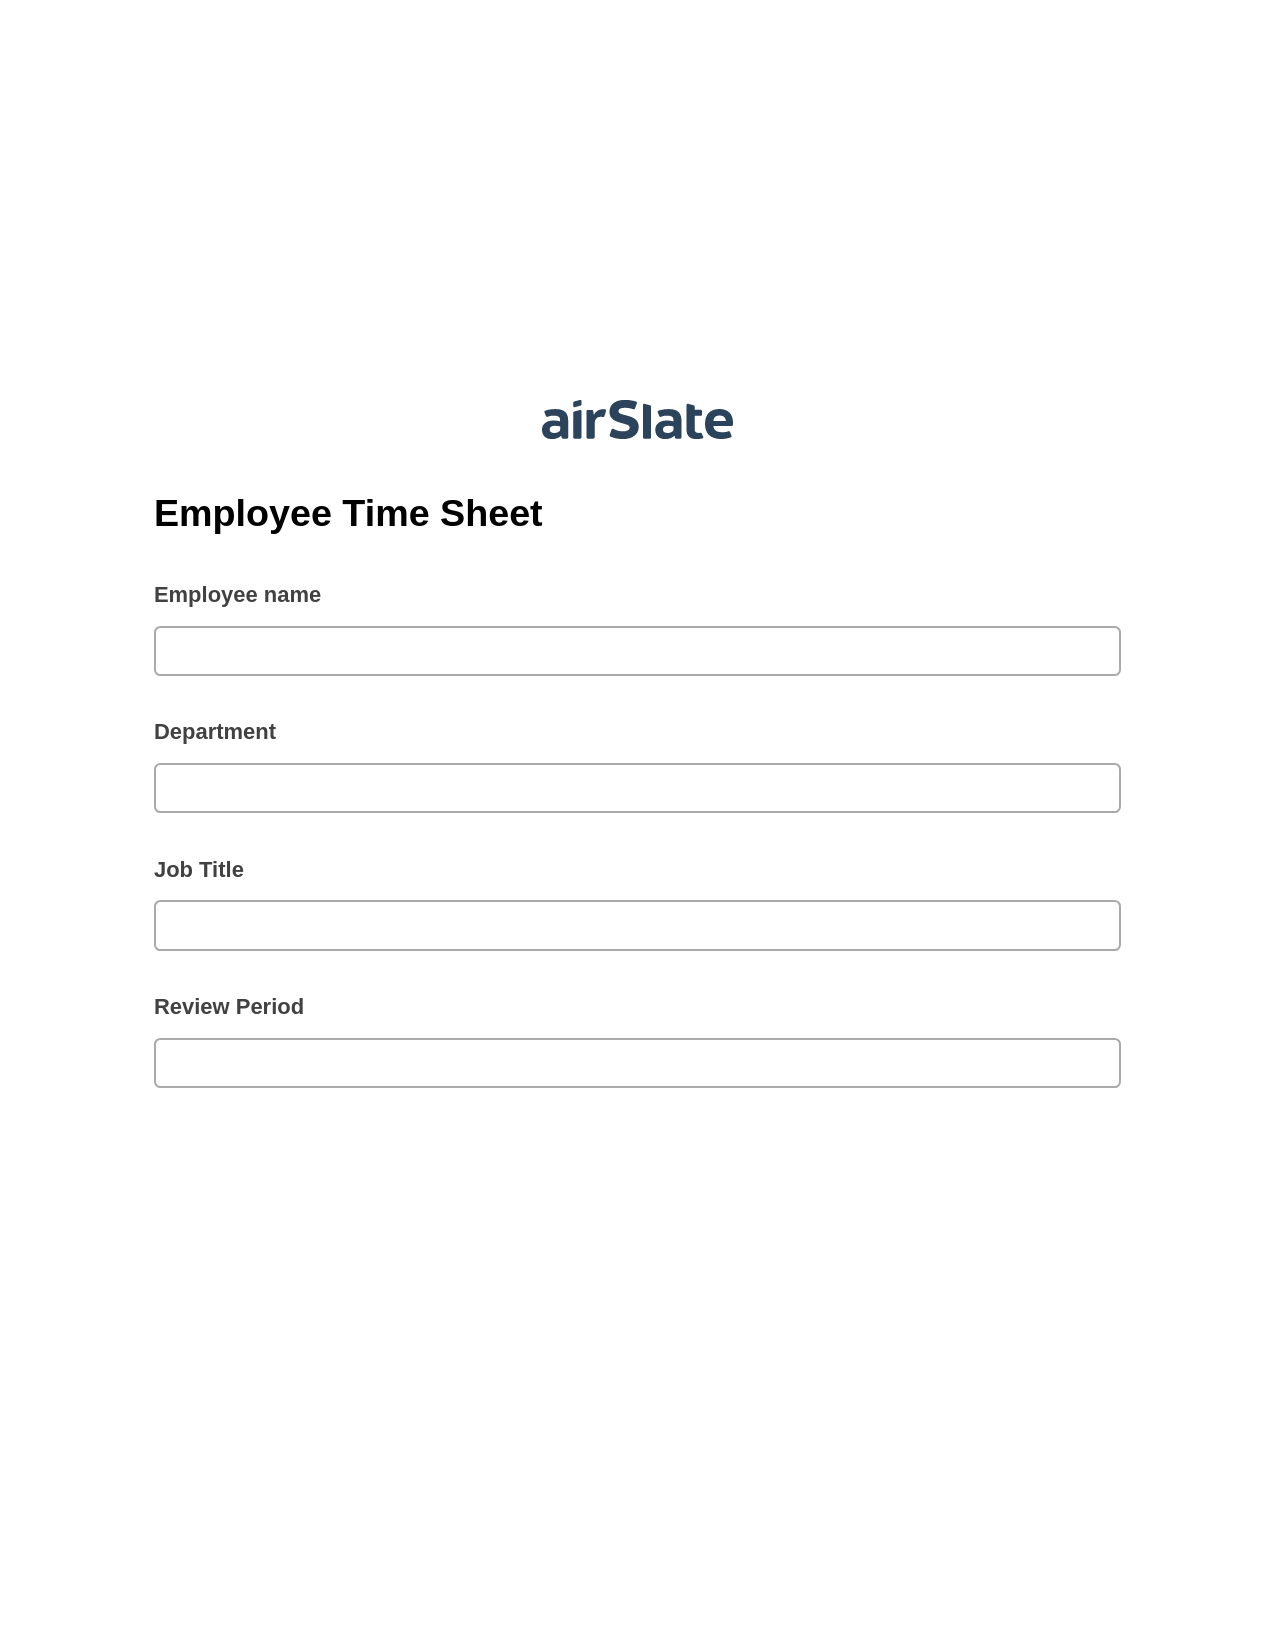 Employee Time Sheet Pre-fill from Litmos bot, Update Audit Trail Bot, Export to Smartsheet